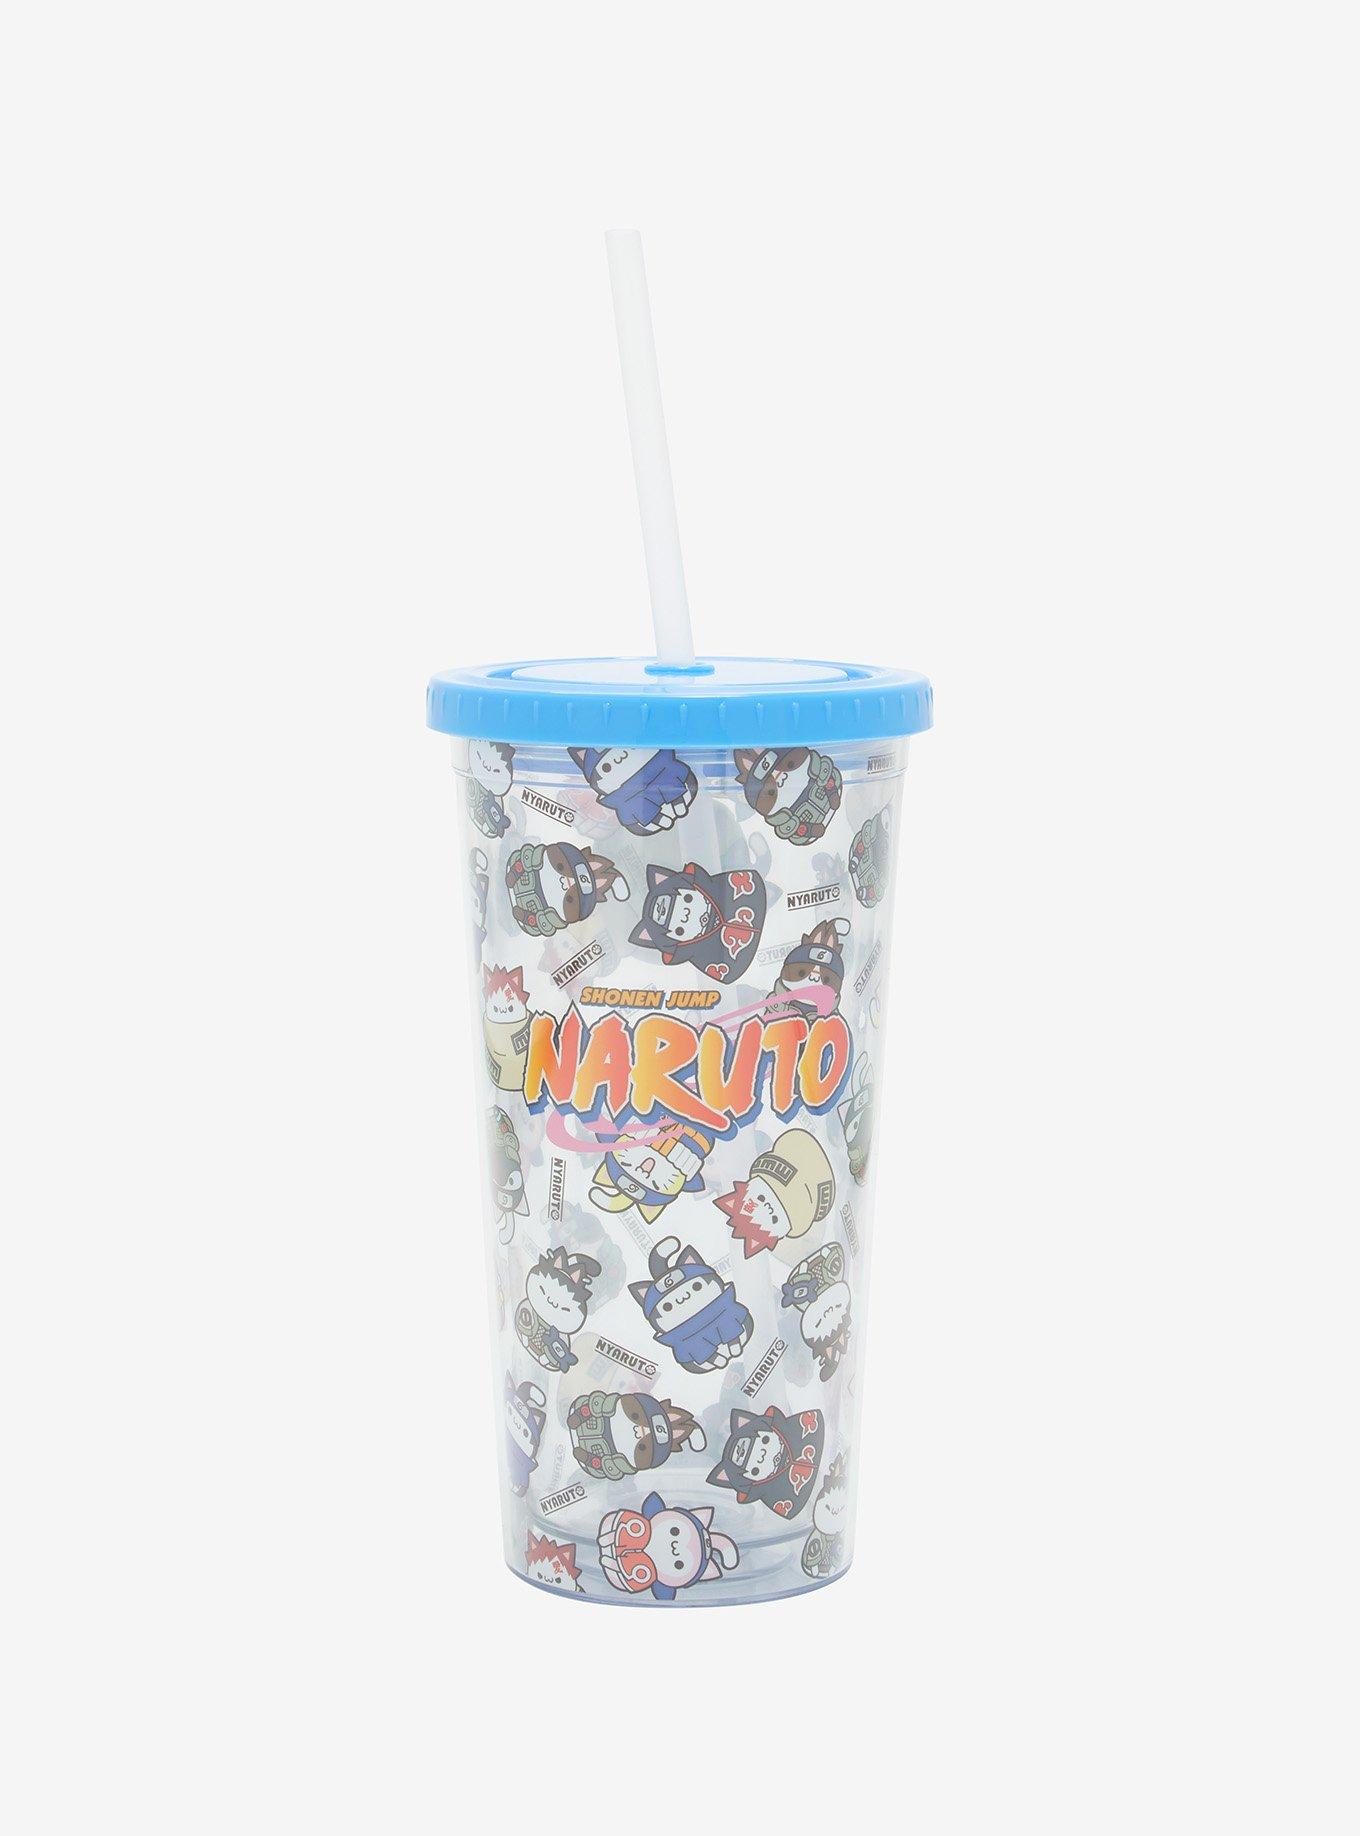 Naruto Shippuden Nyaruto Group Acrylic Travel Cup, , hi-res